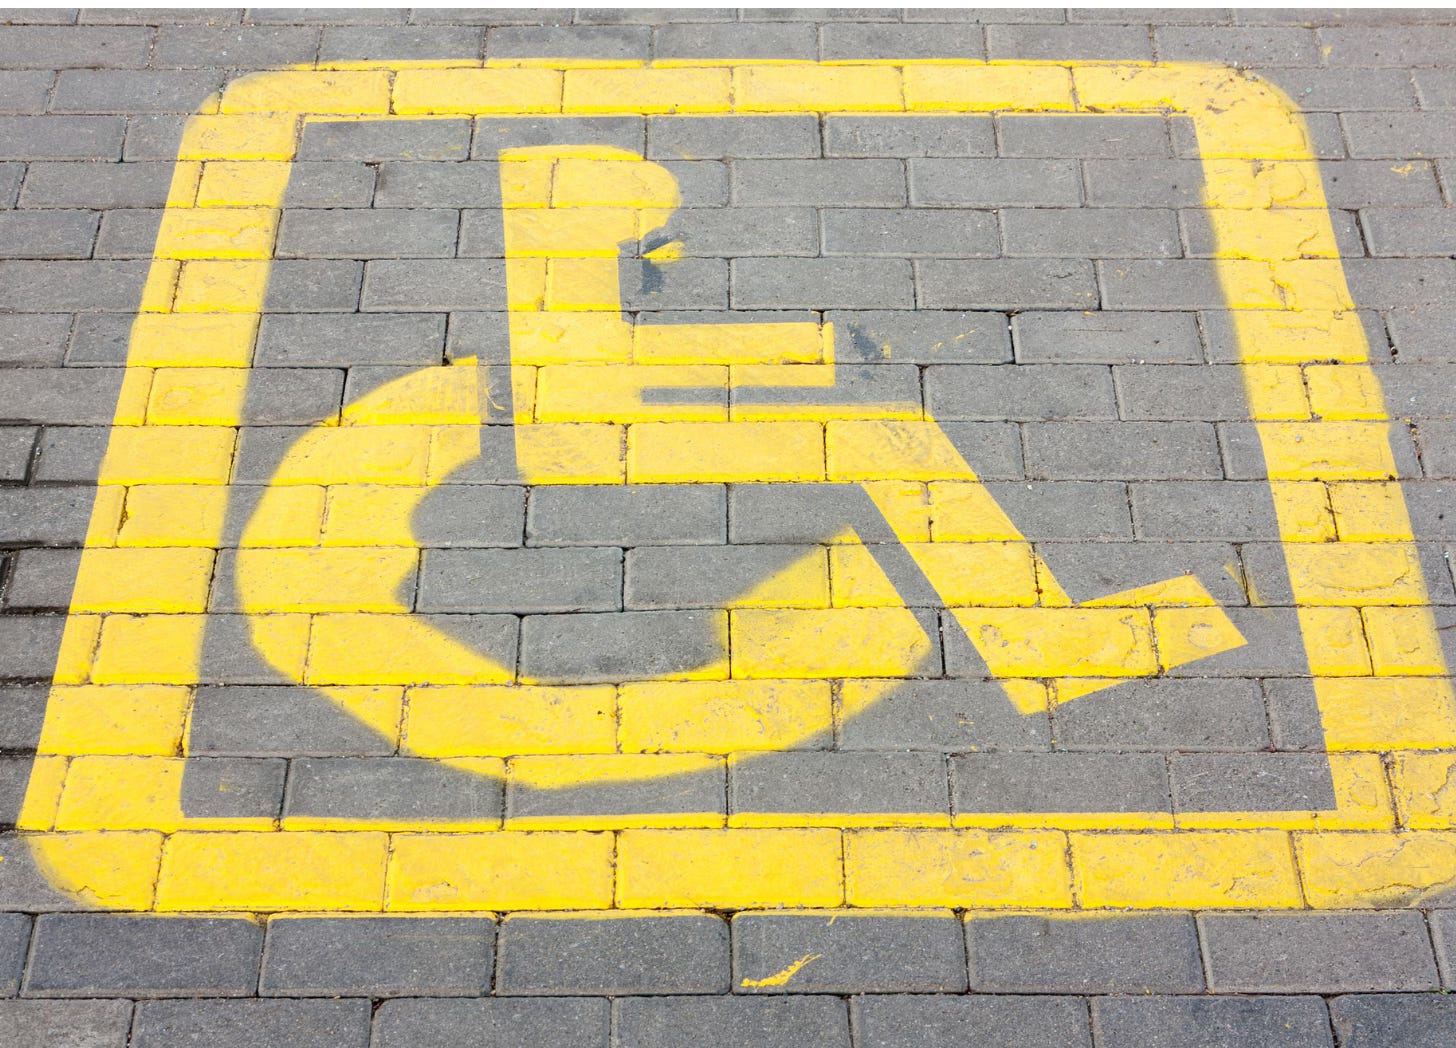 Yellow wheelchair symbol painted on brick pavement